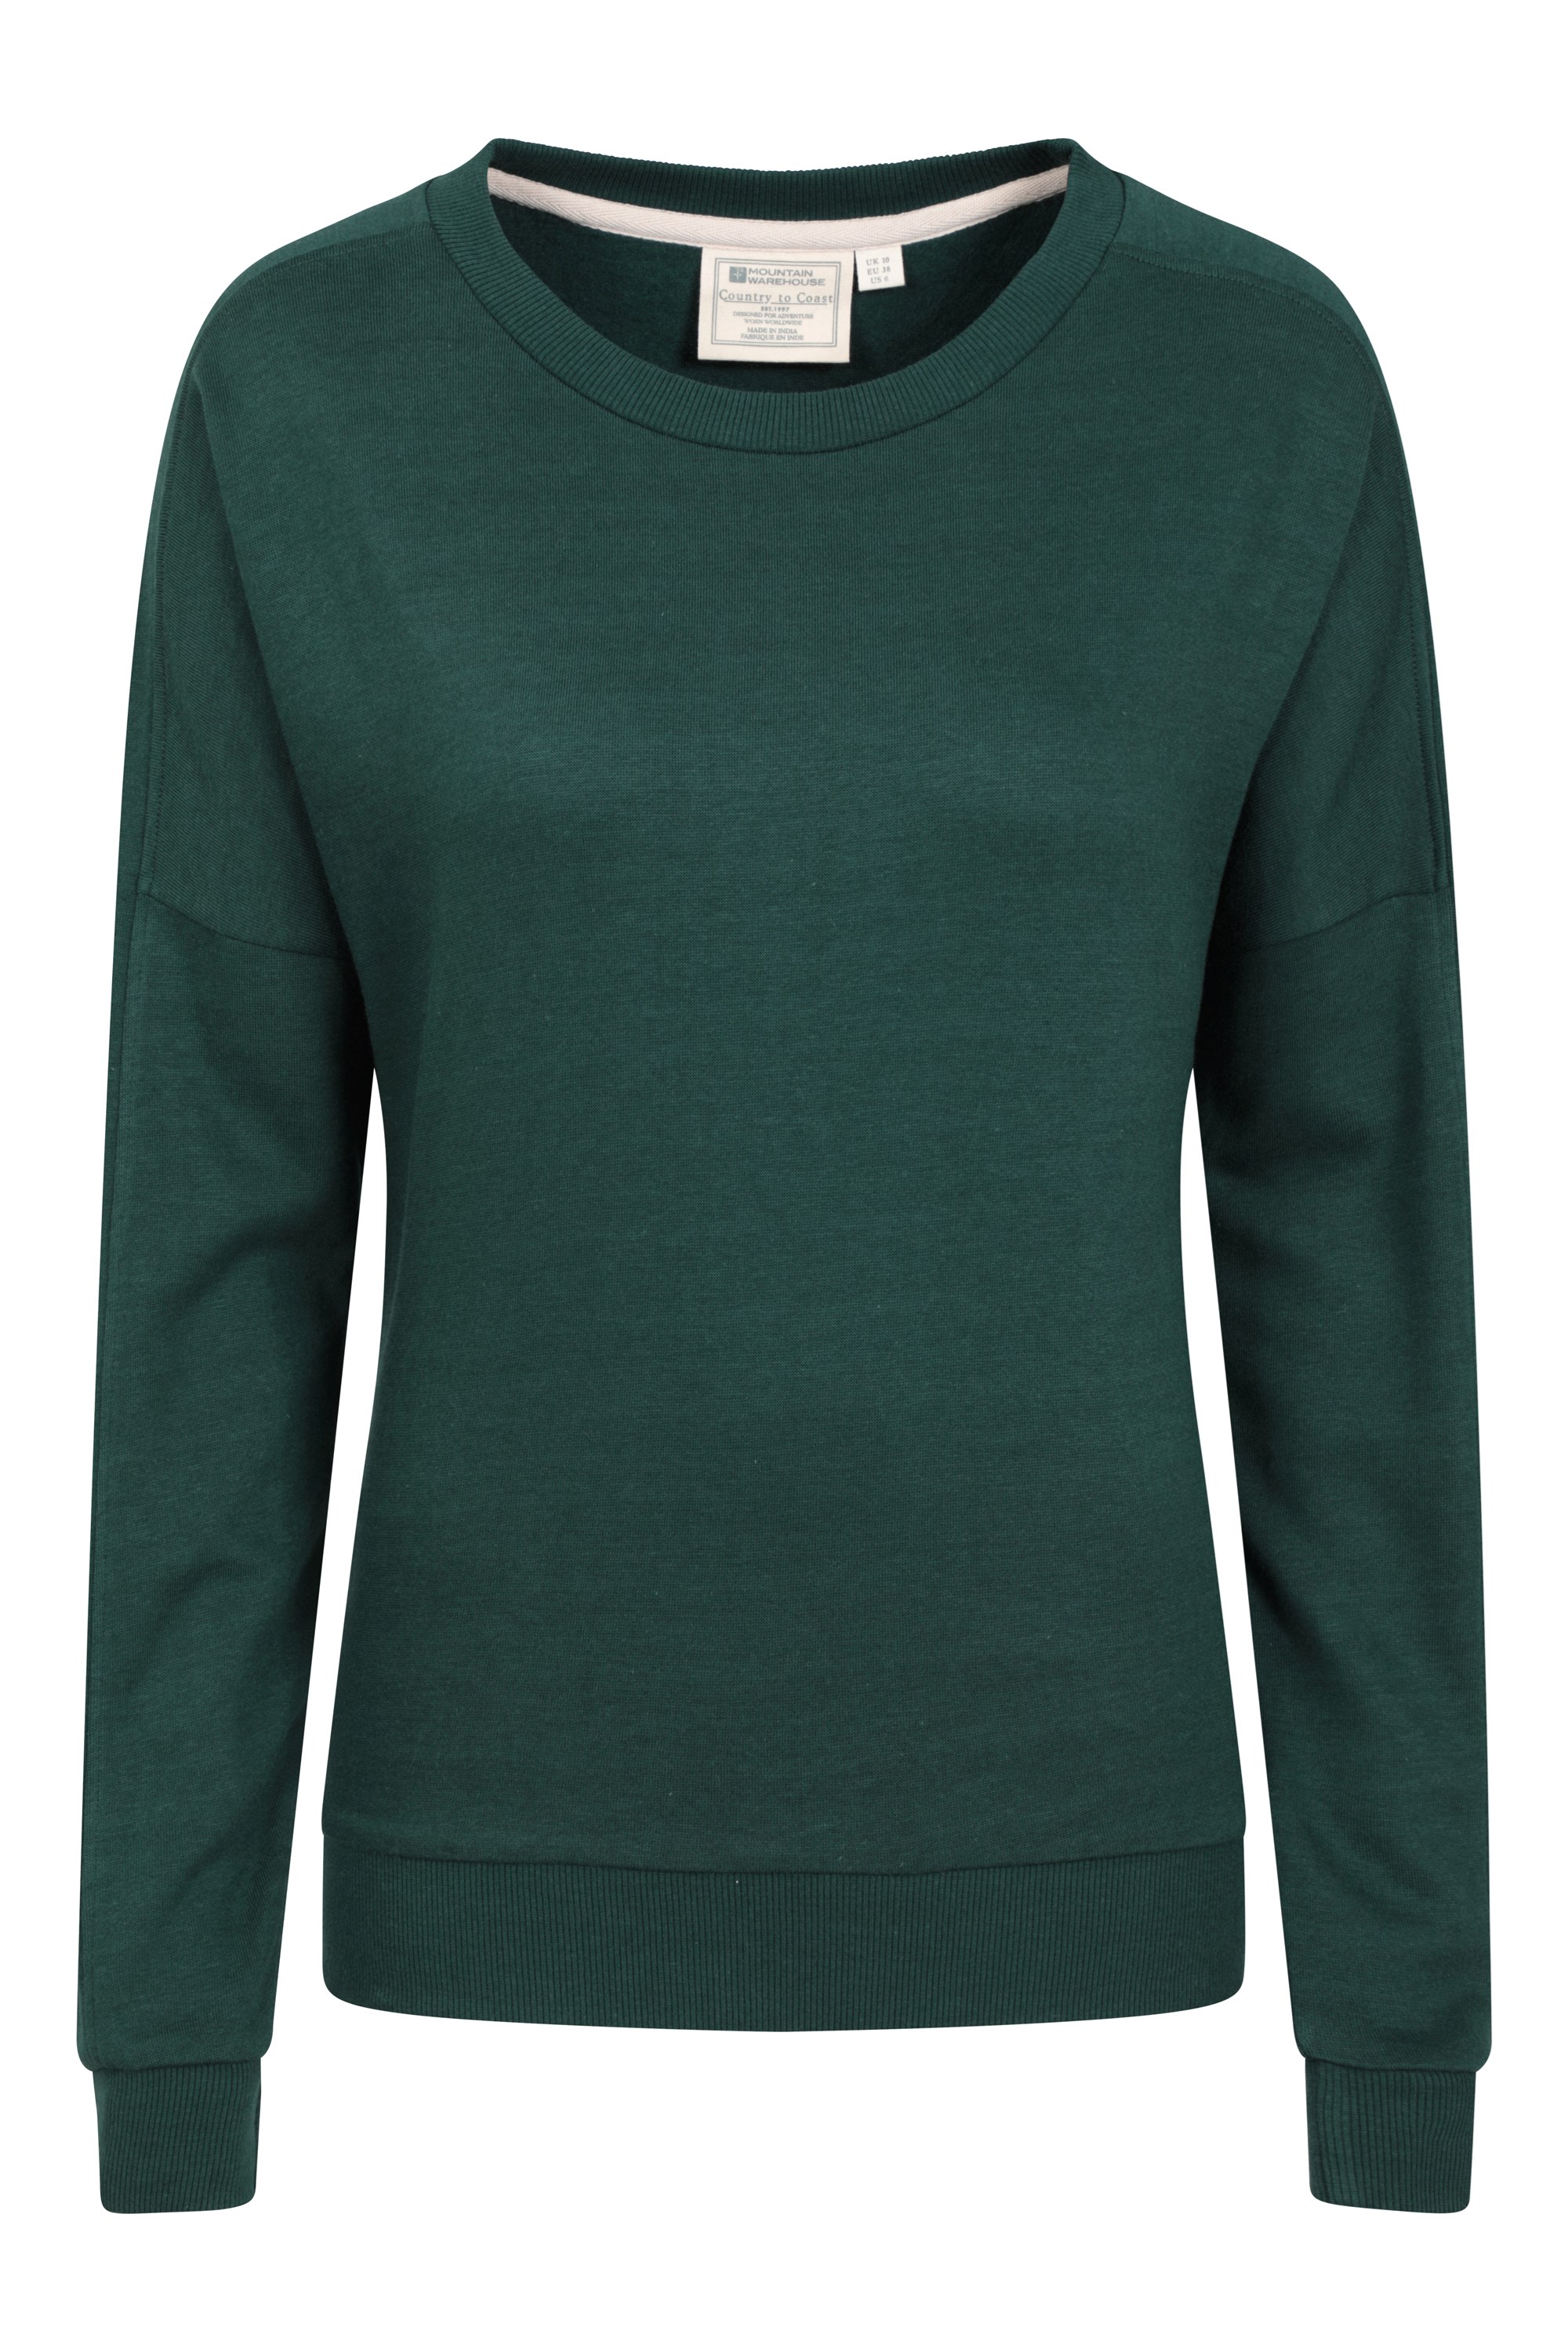 Bamboo Womens Loungewear Sweatshirt - Green